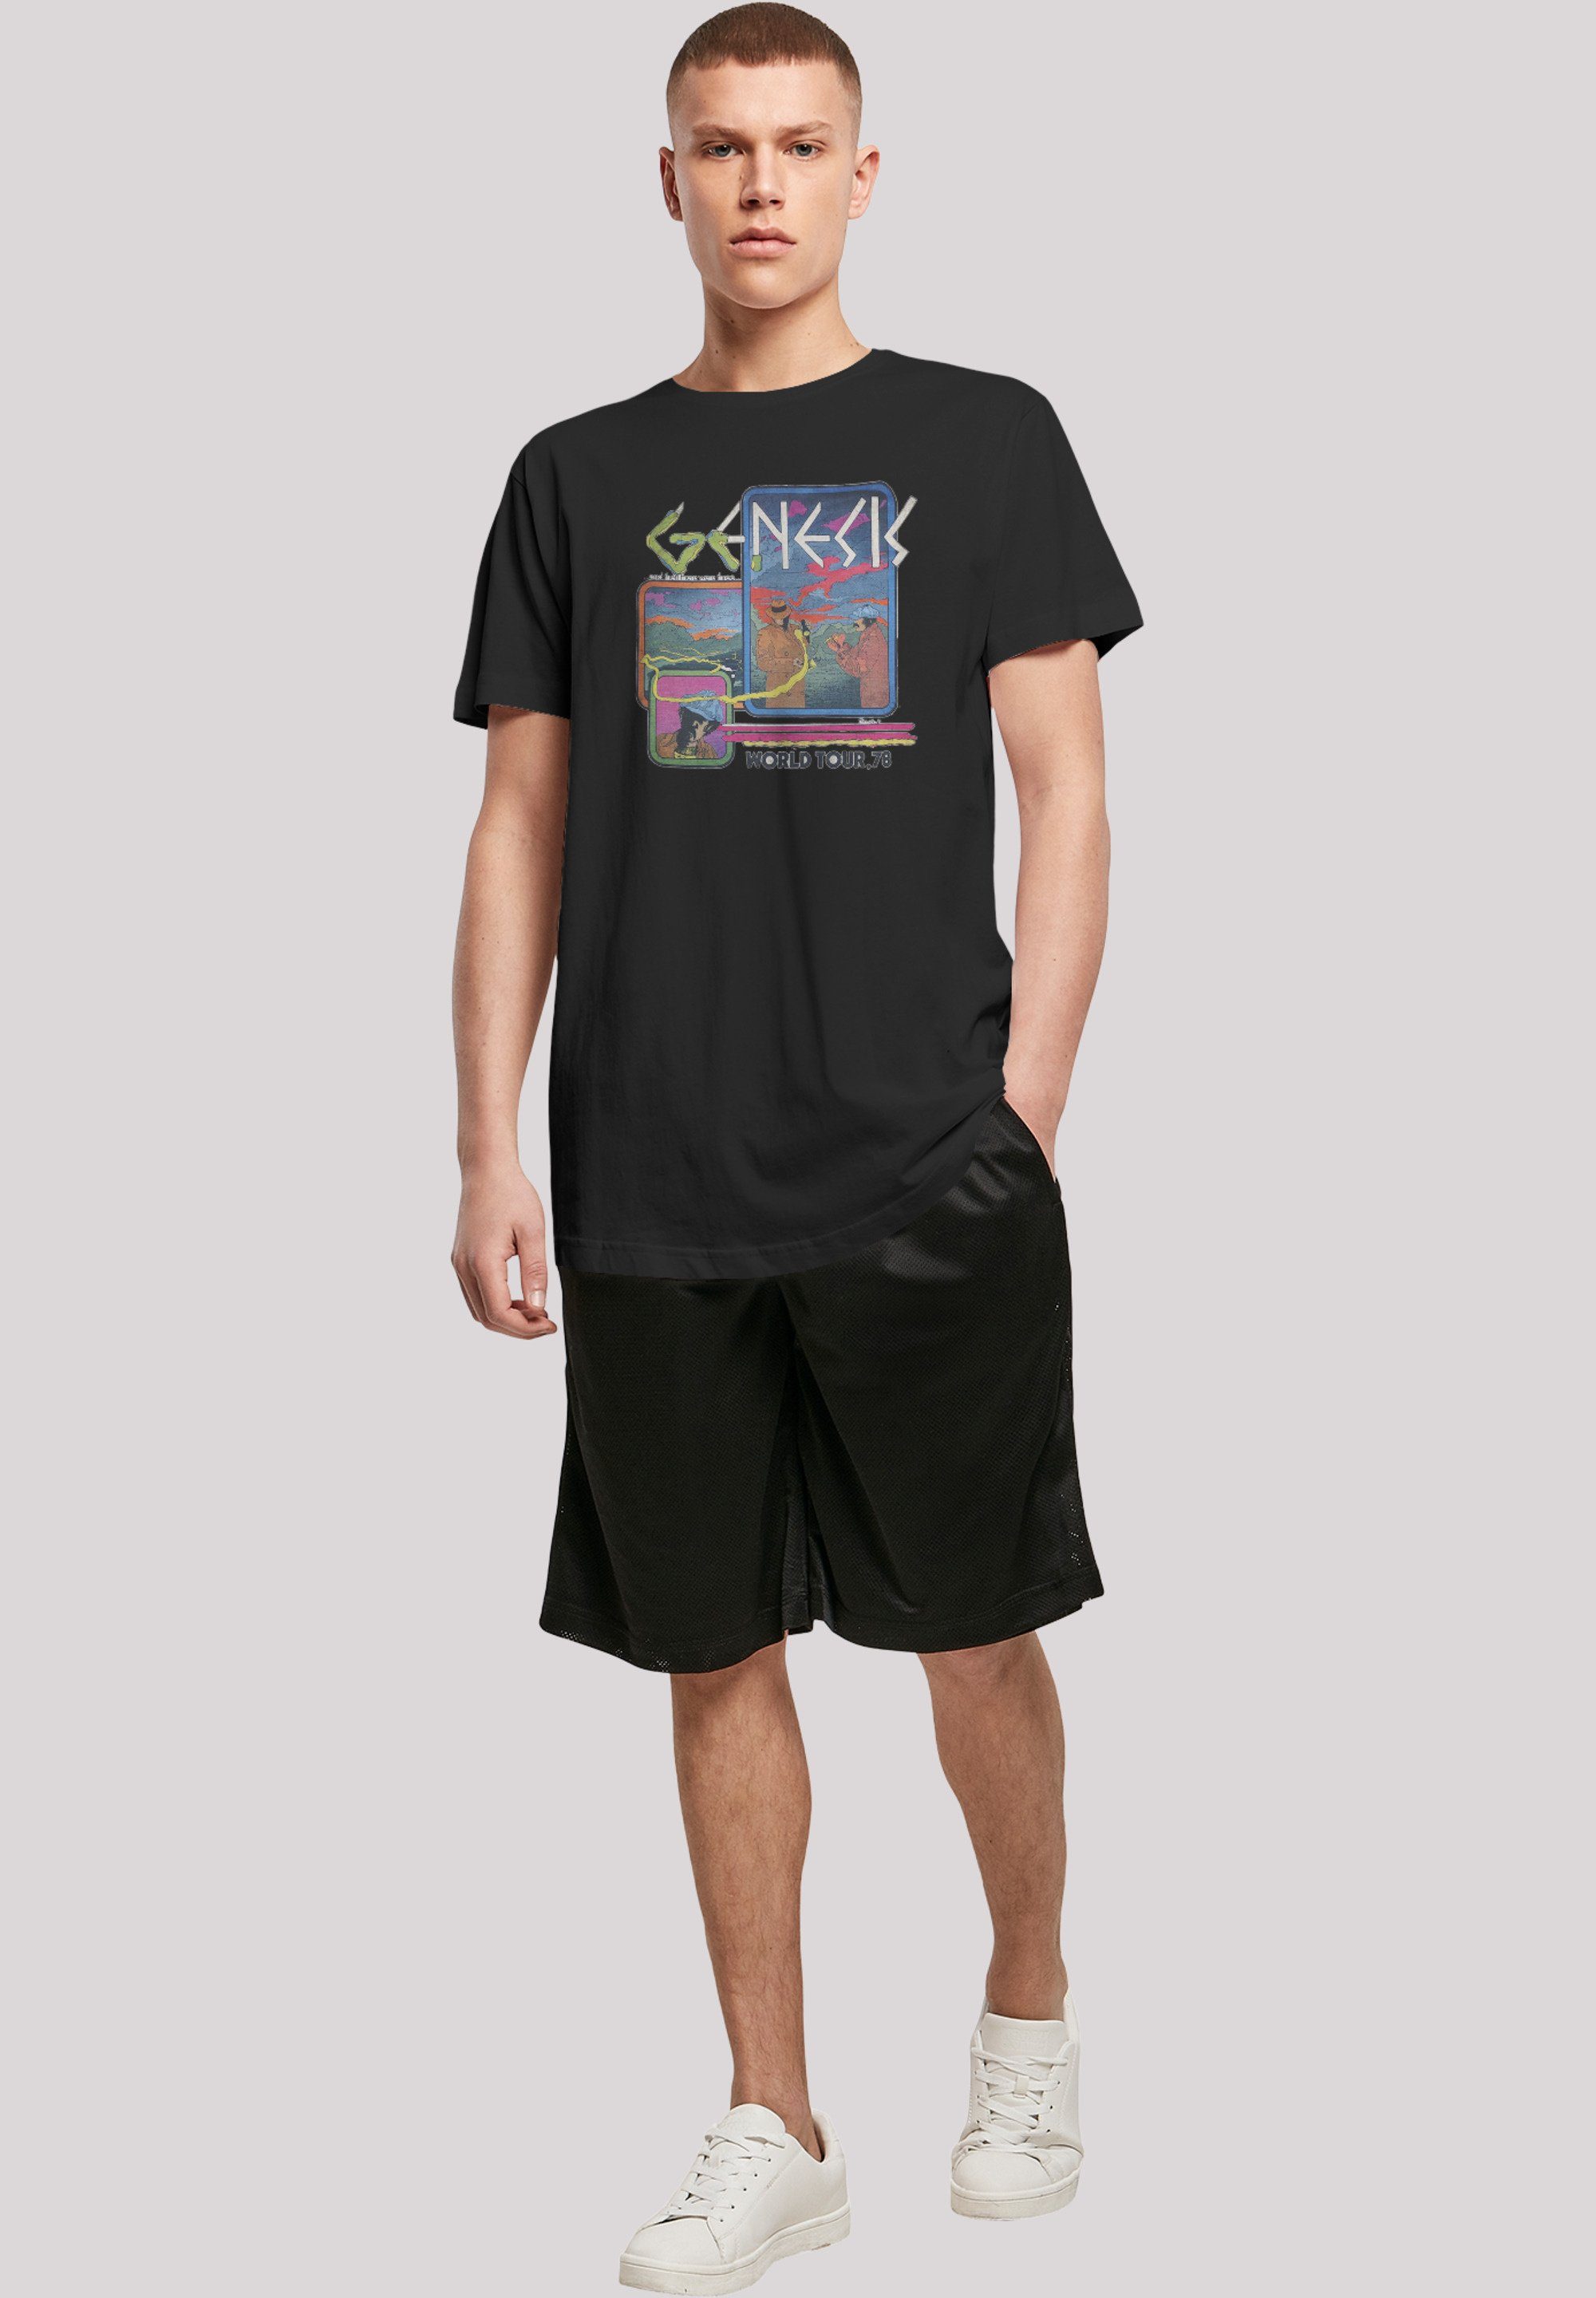 F4NT4STIC T-Shirt Genesis World Tour Print schwarz 78'